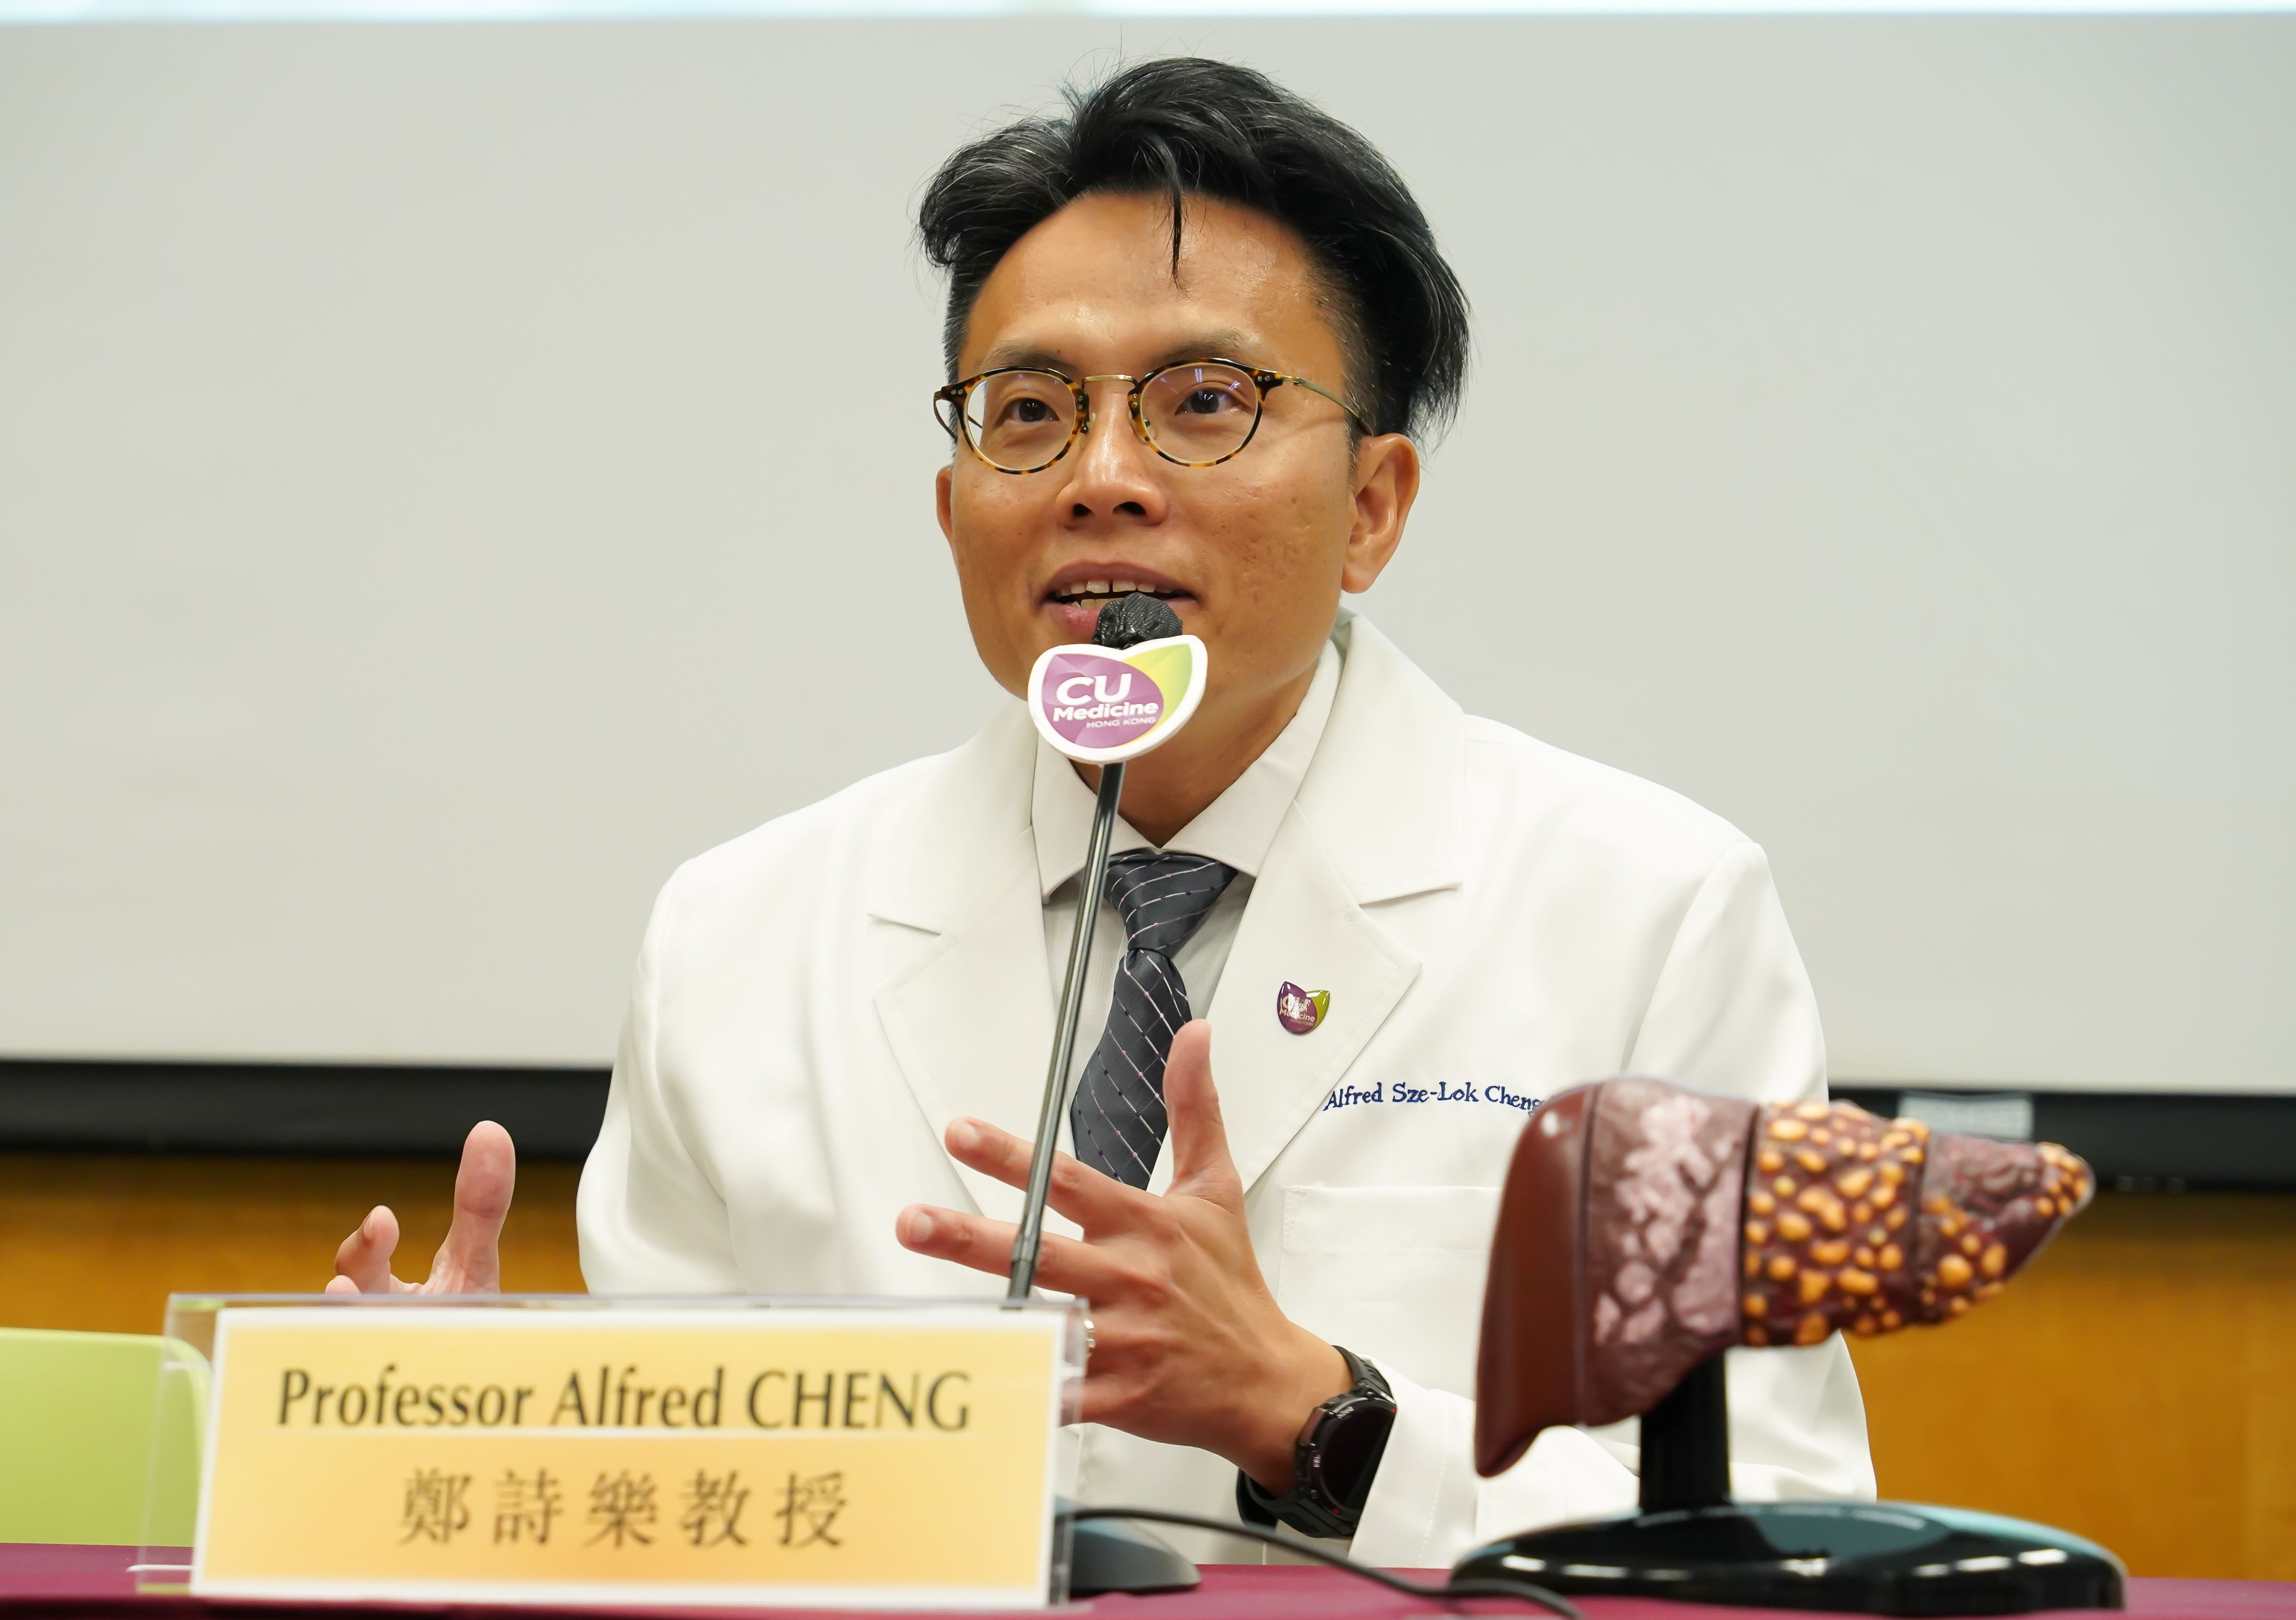 Professor Alfred Cheng